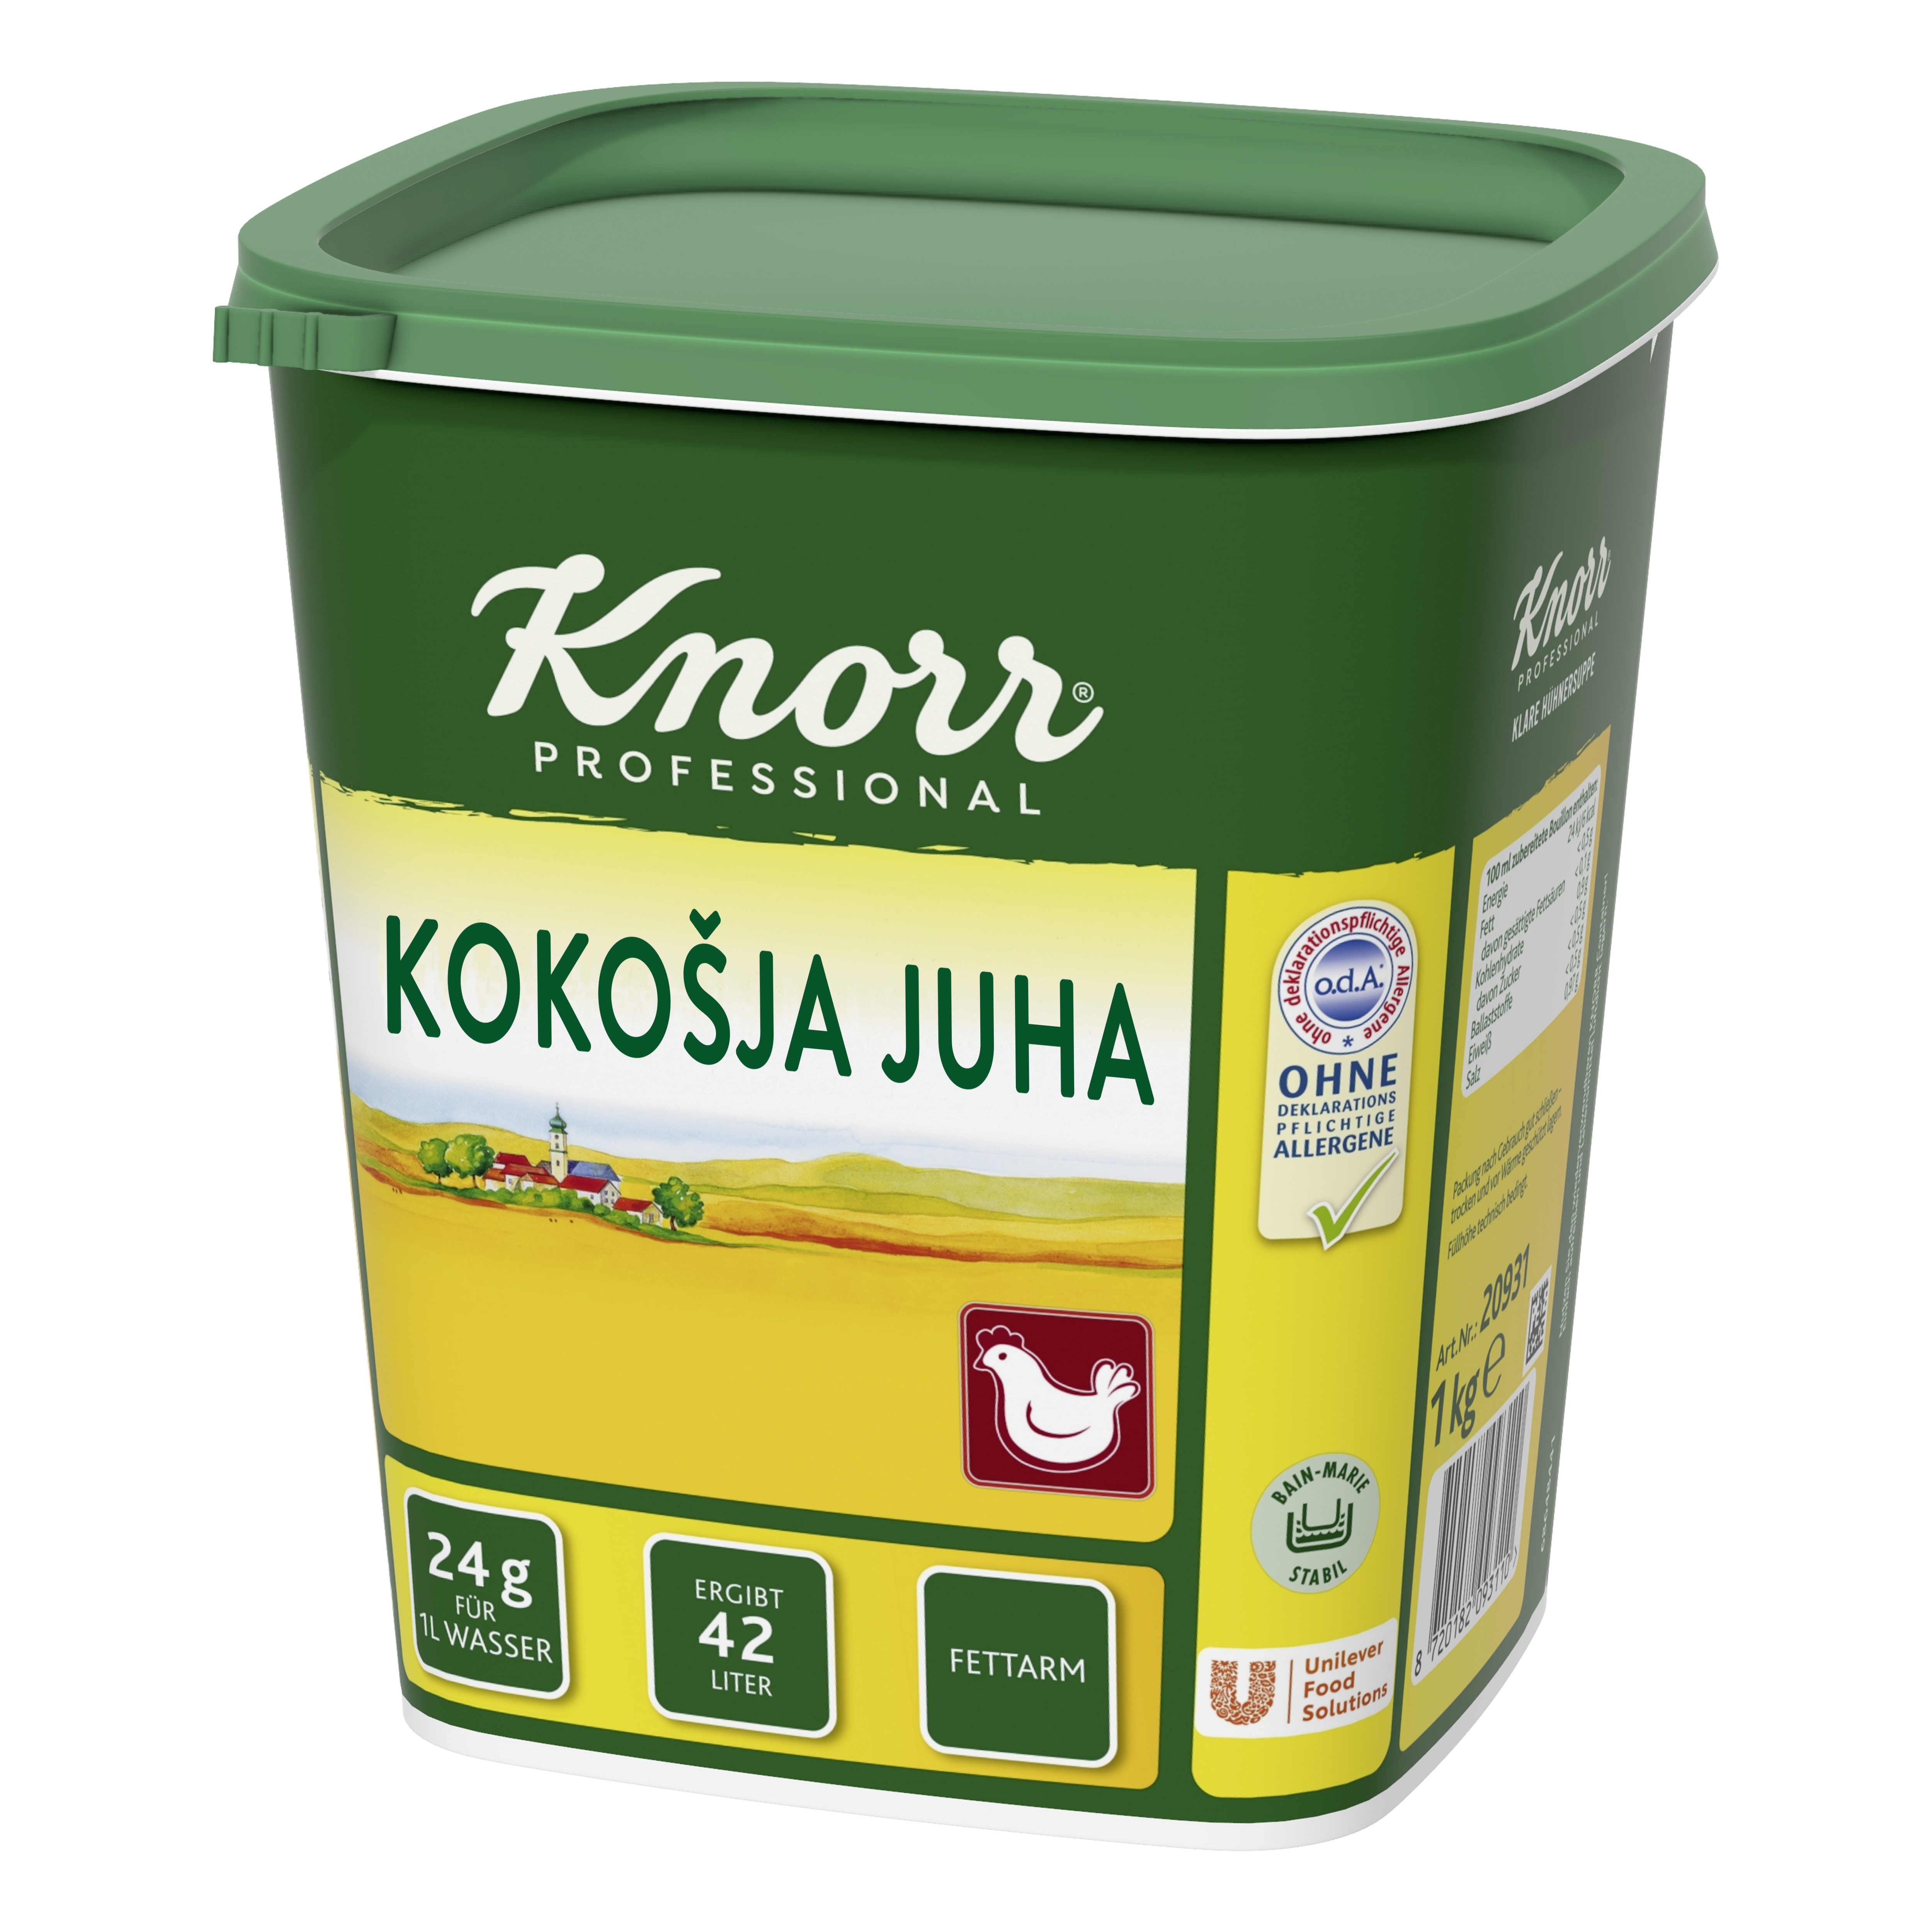 Knorr Kokošja juha 1 kg - 